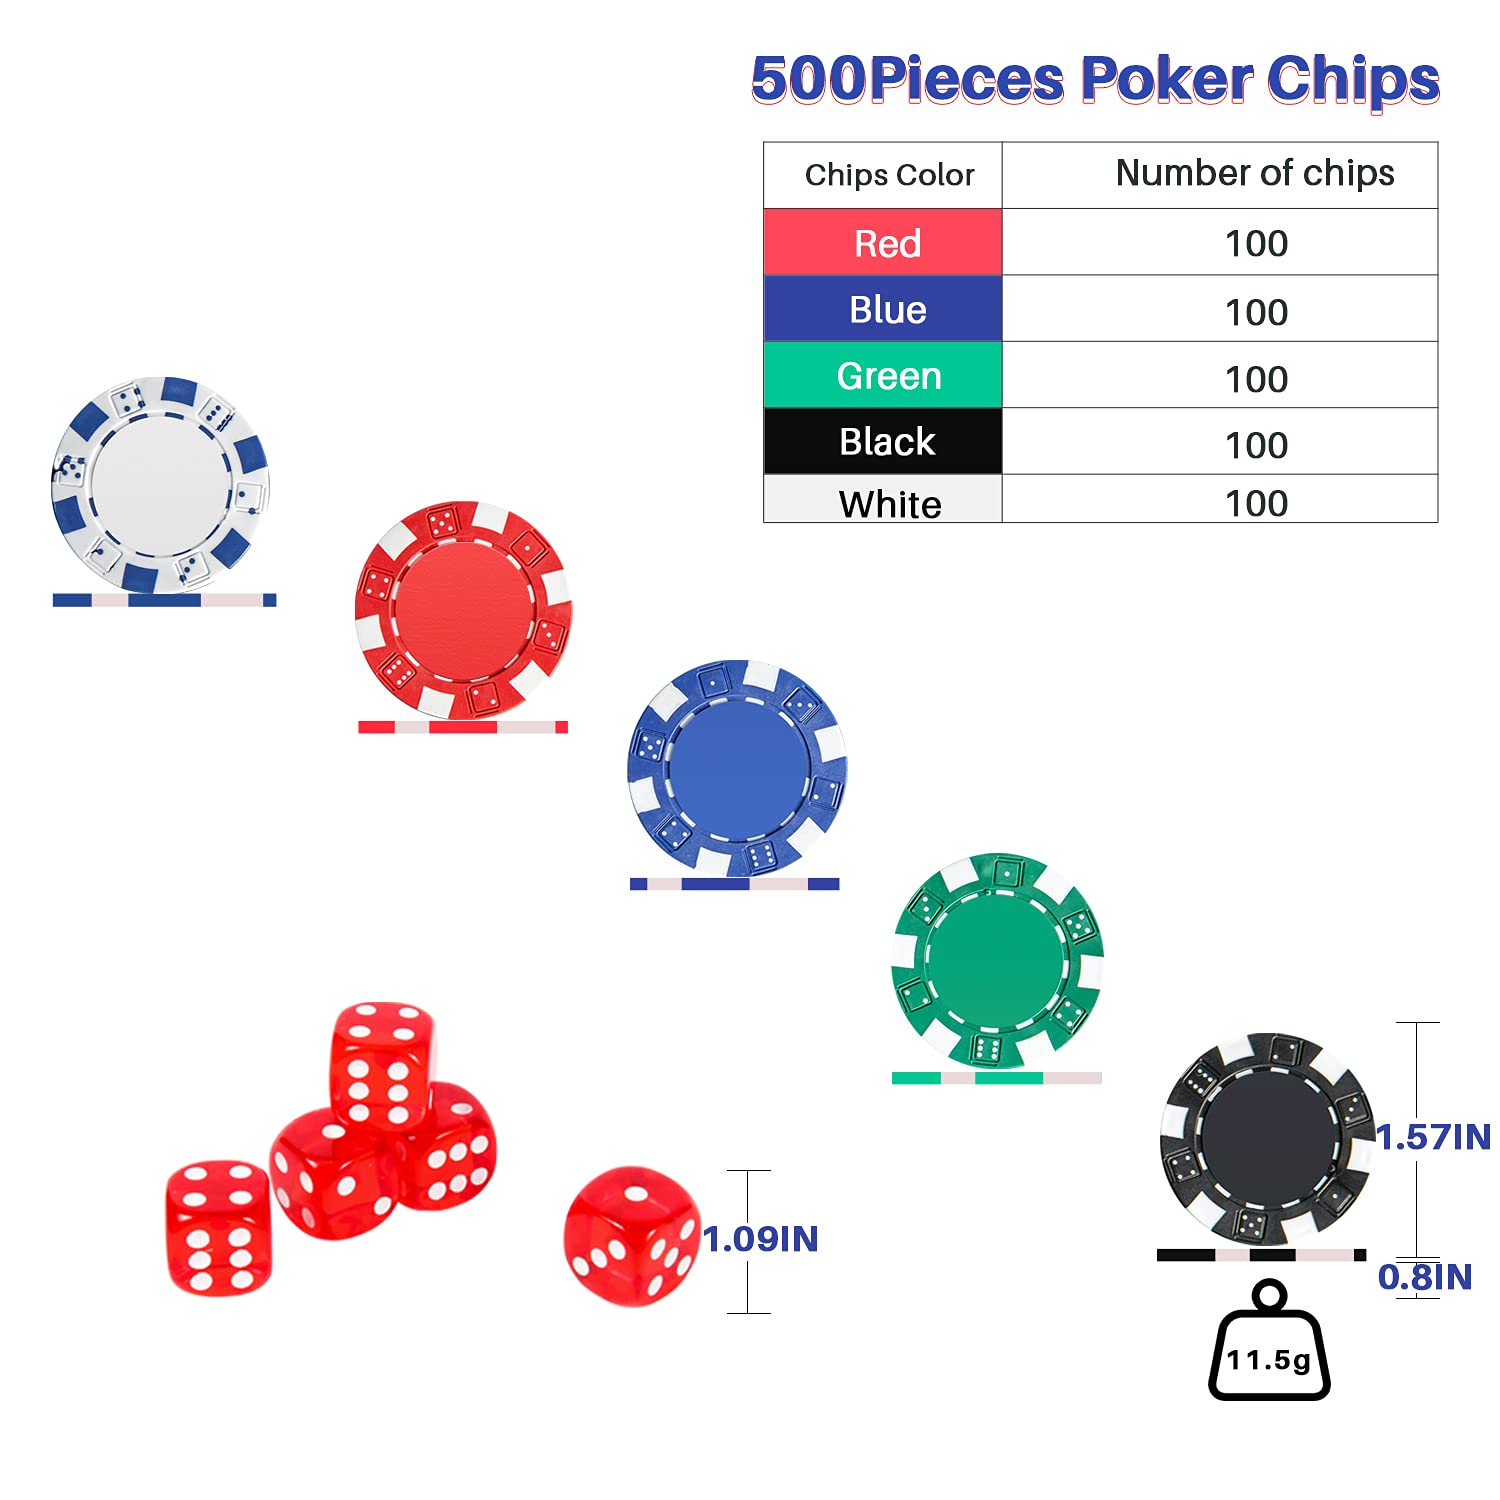 PLAYWUS Poker Chip Set Professional, 500 PCS Casino Poker Chips with Aluminum Case,11.5 Gram Chip for Texas Holdem Blackjack Gambling